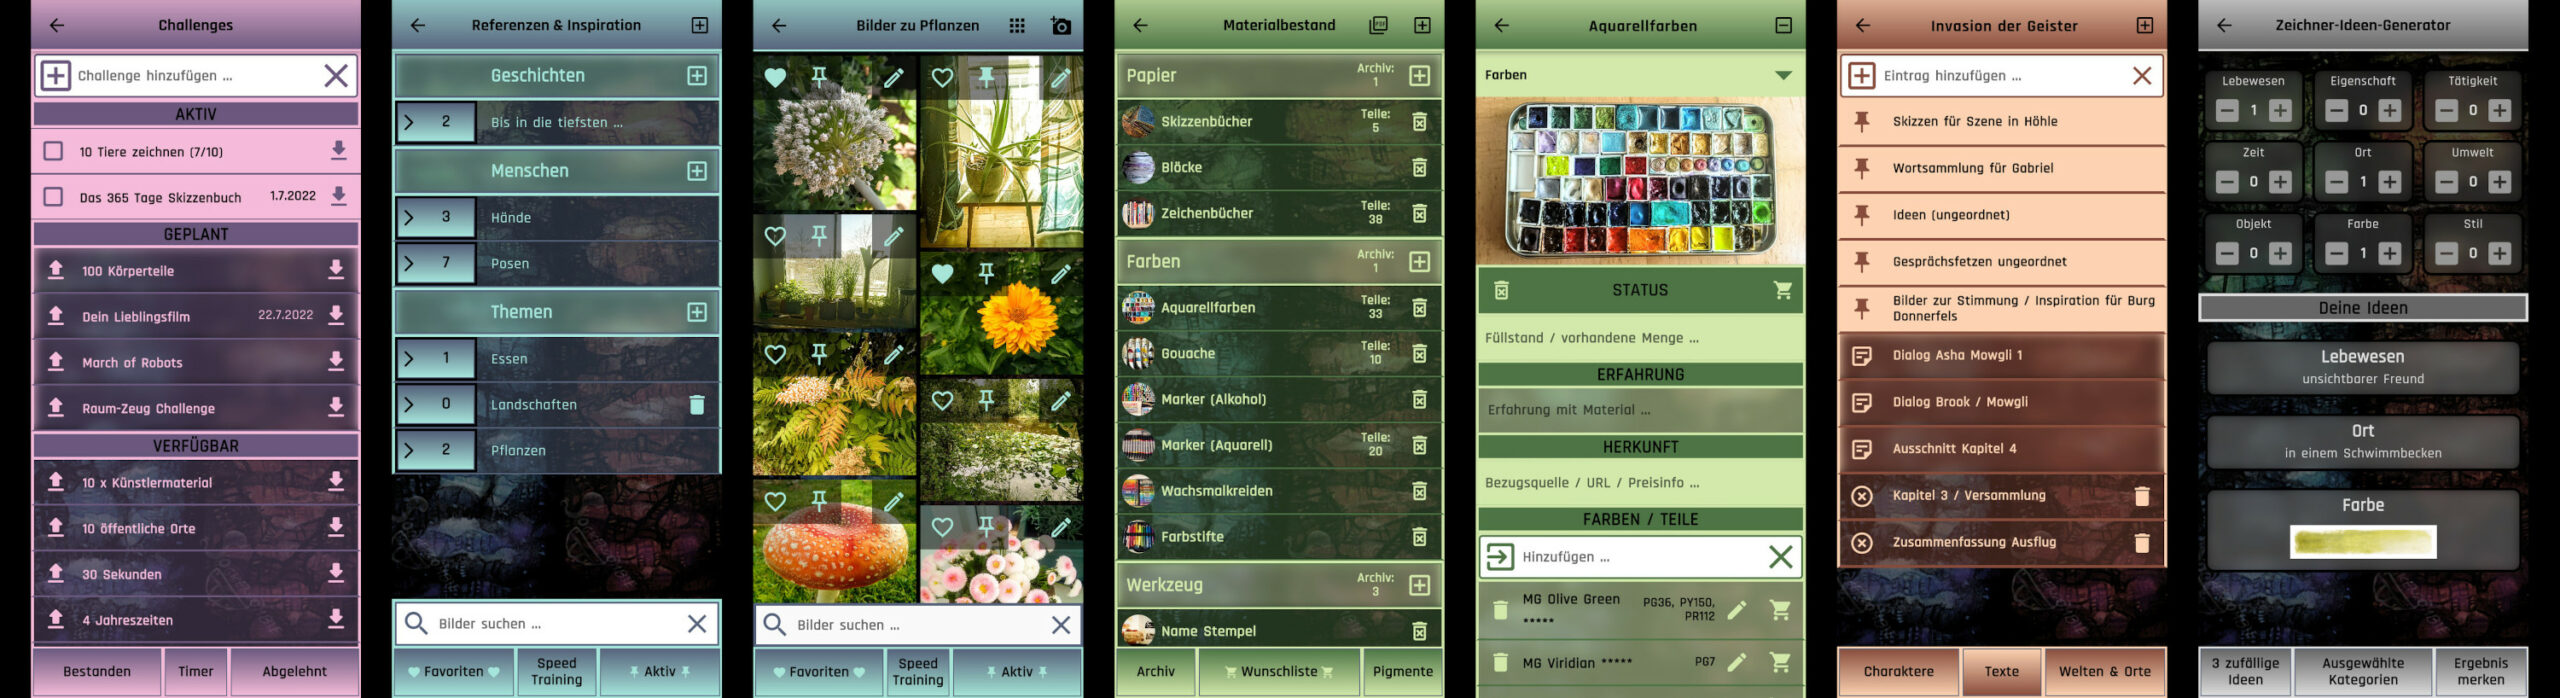 sockes art helper andorid app screenshots reihe